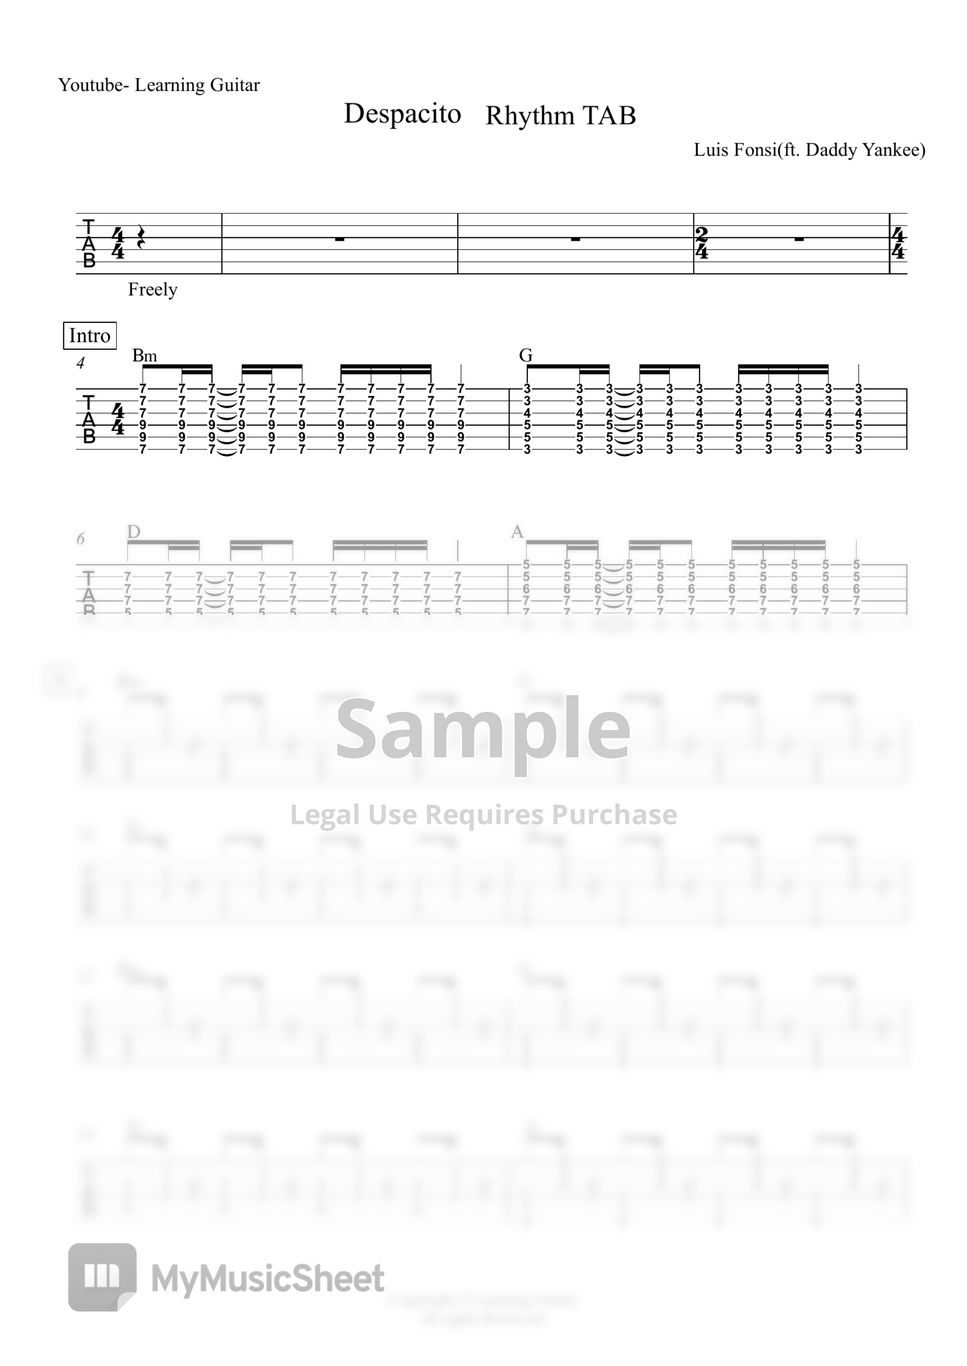 Luis Fonsi - Despacito (Rhythm TAB) by Learning Guitar